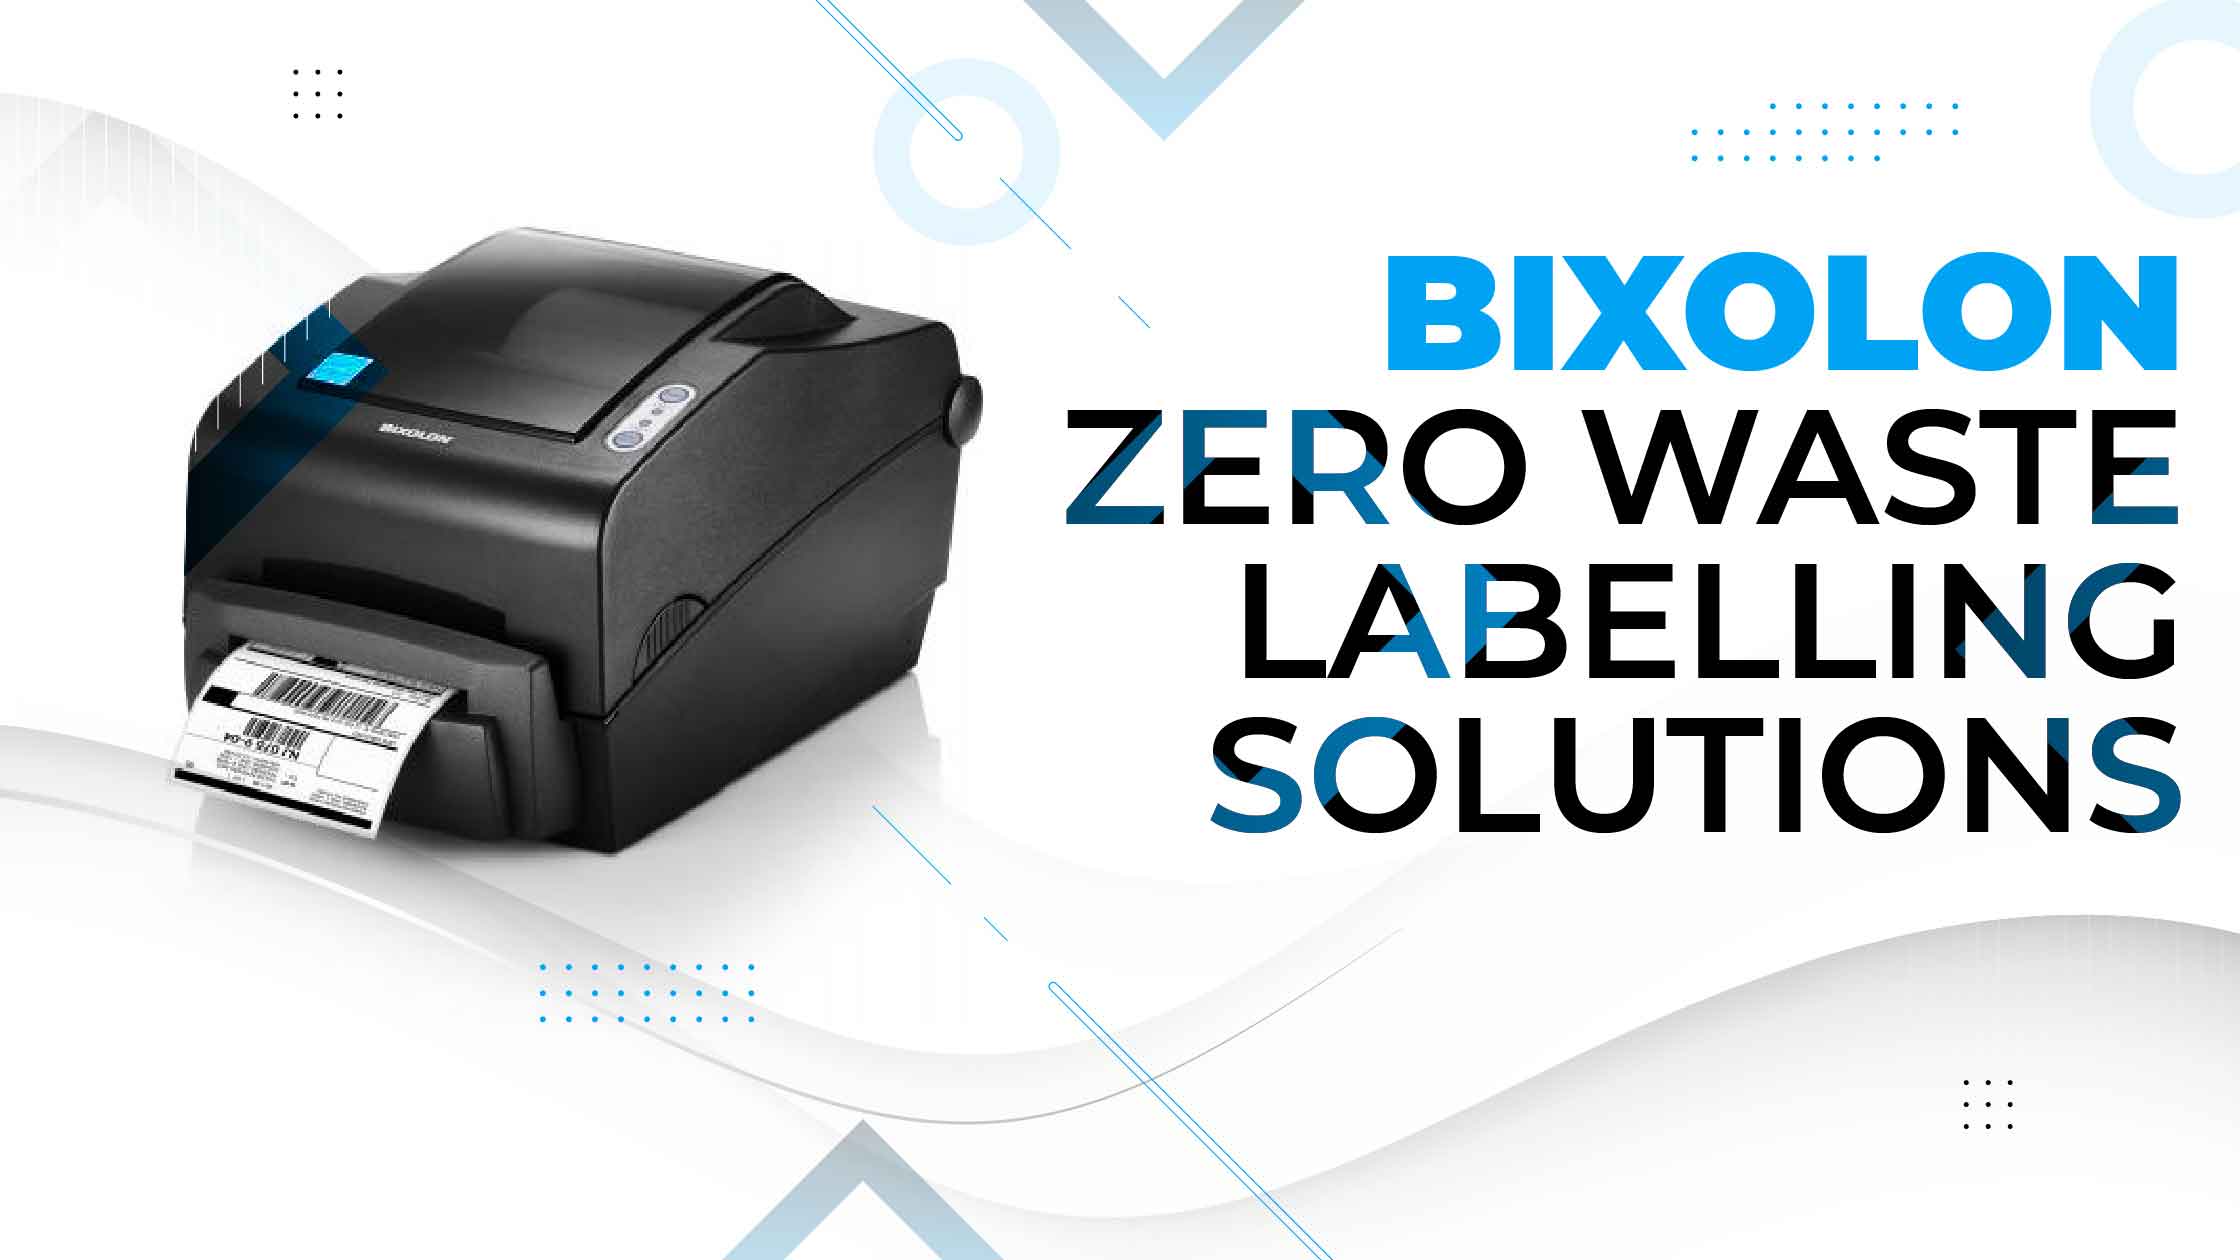 Bixolon Zero Waste Labelling Solutions